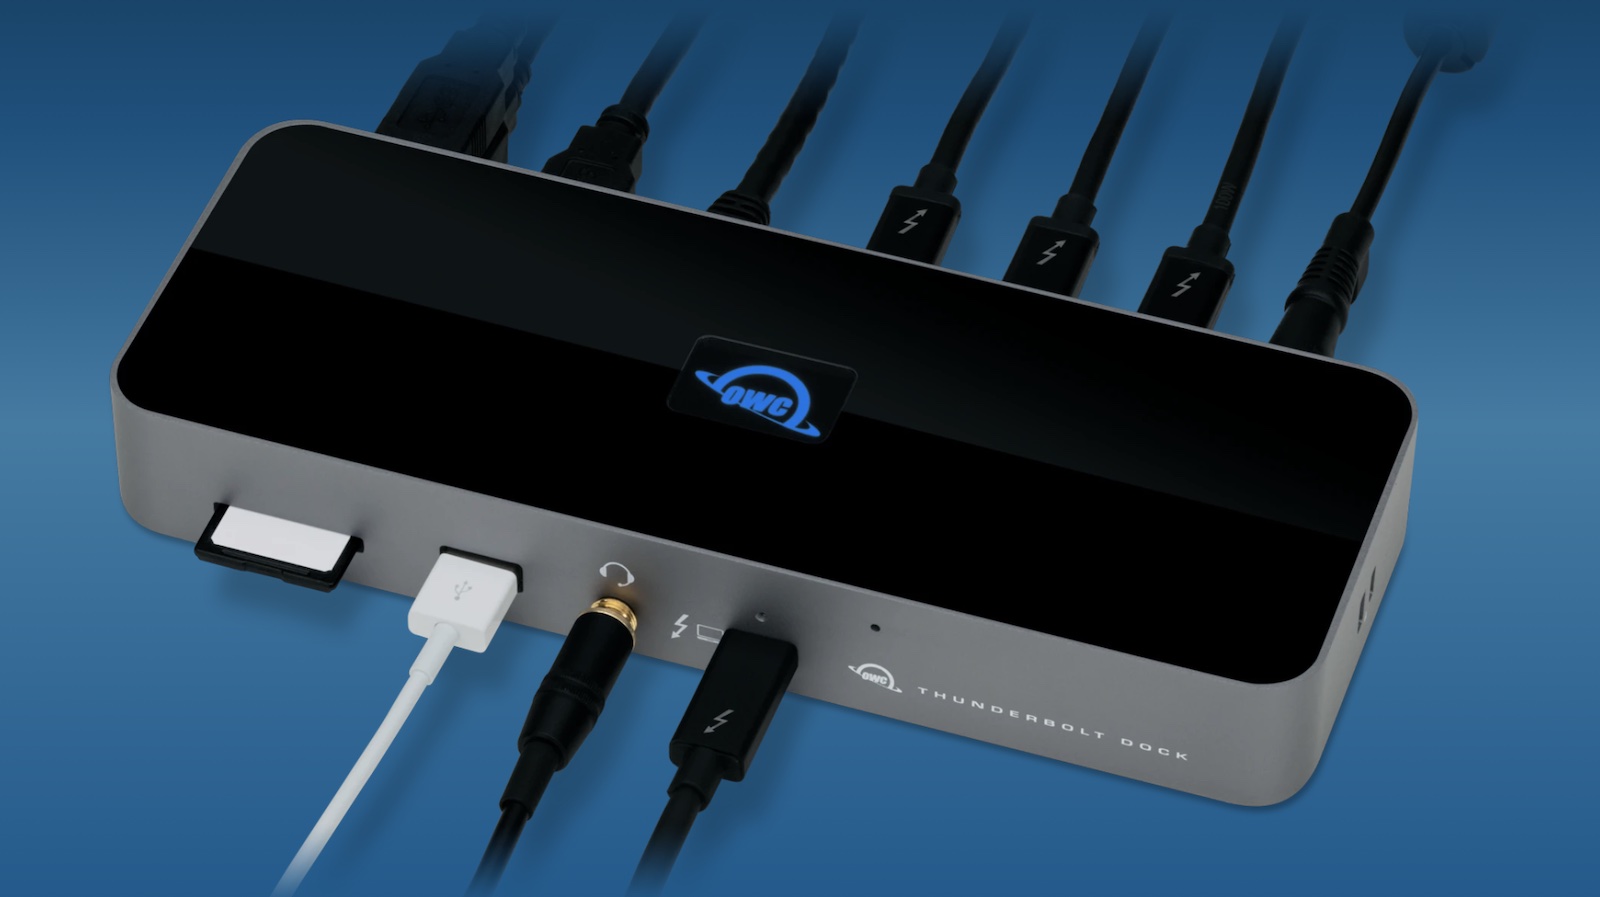 OWC's Upcoming Thunderbolt Hub Adds More Thunderbolt 3 Ports to Your Mac -  MacRumors